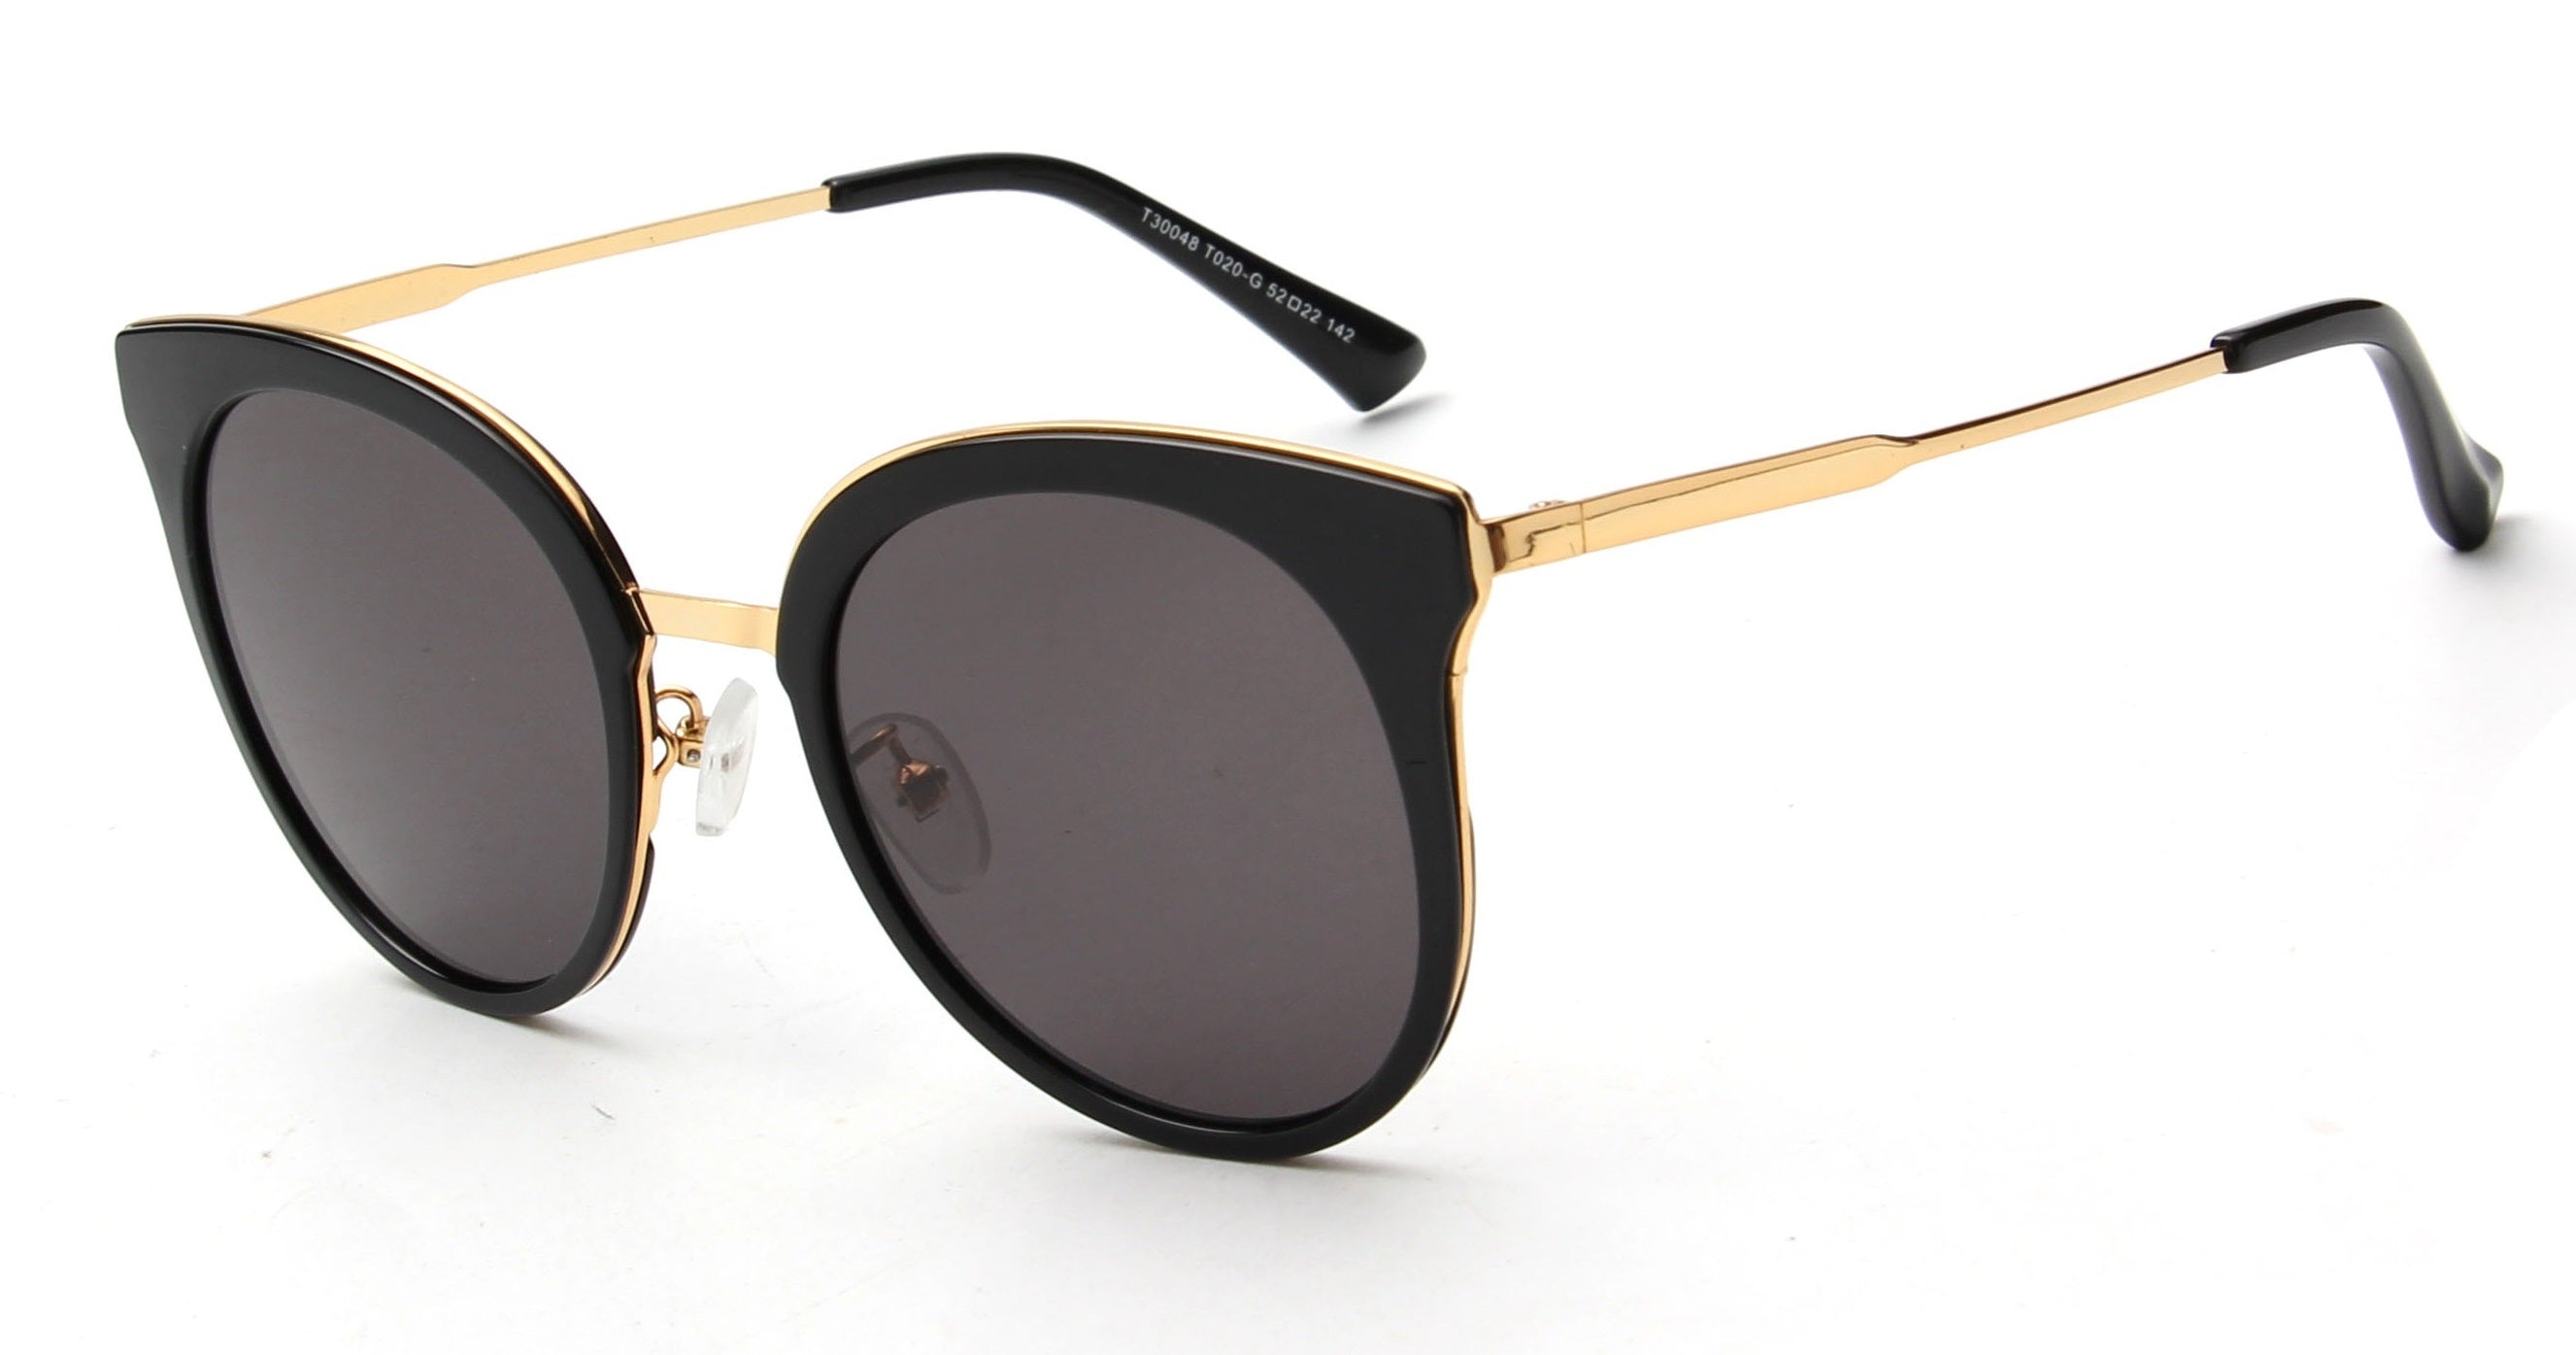 LAT-T30048 - Women Polarized Round Cat Eye Sunglasses Black